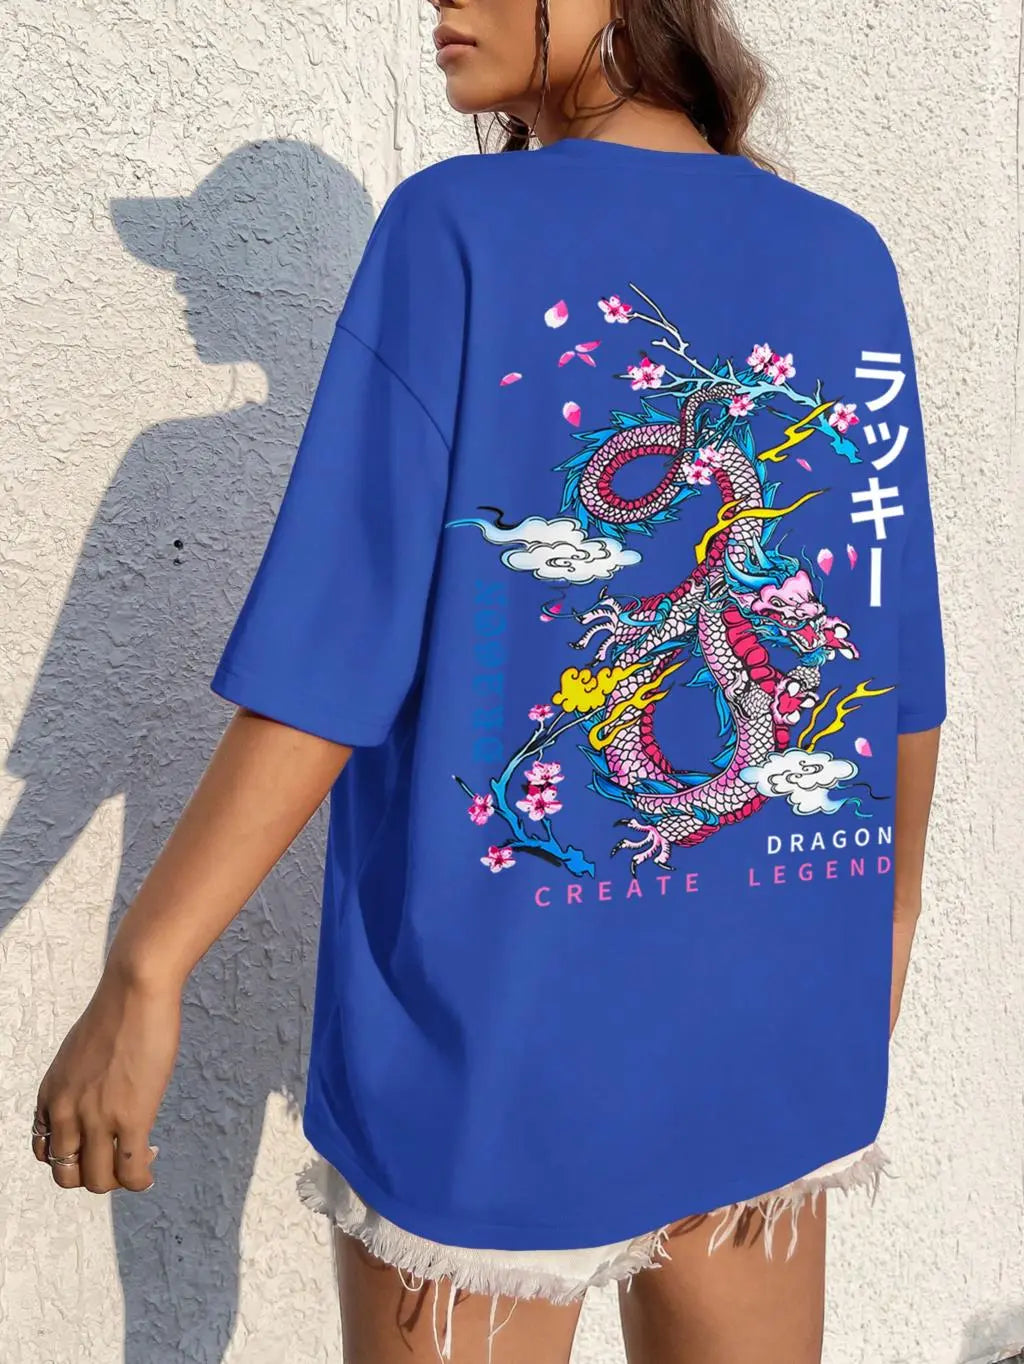 T-Shirt Dragon Rose et Bleu | 10 Couleurs - DragonFinity